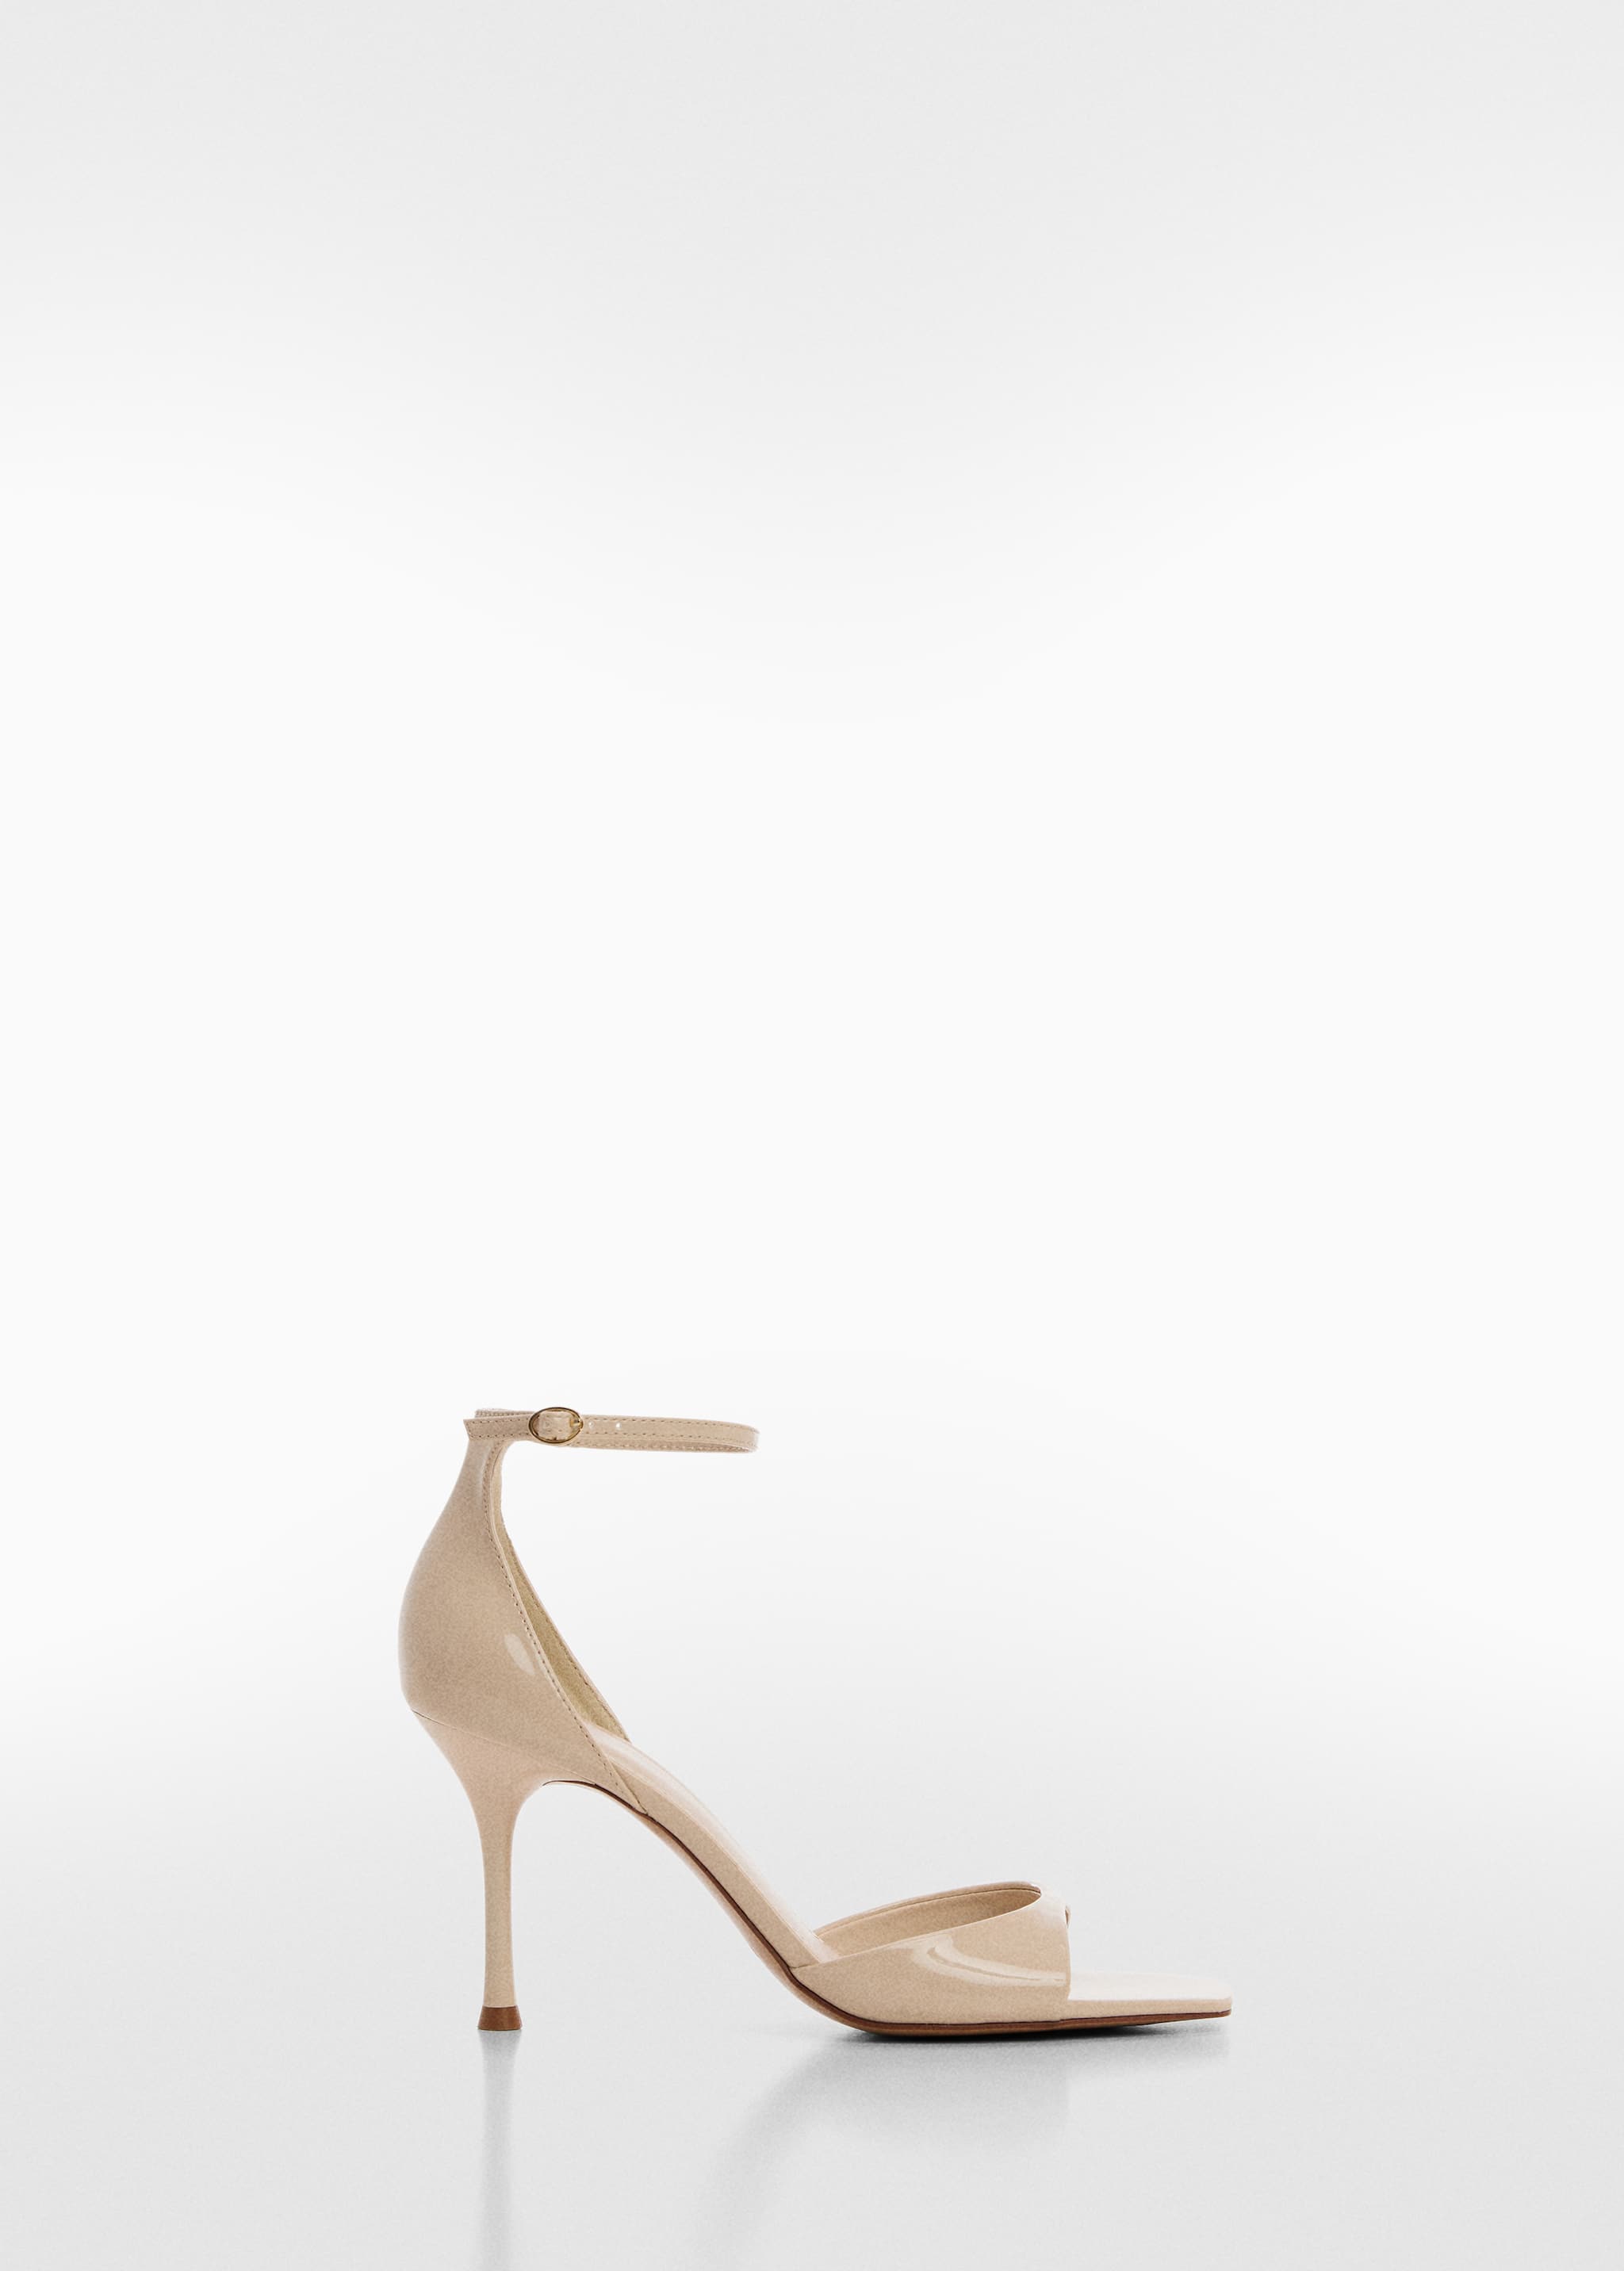 Patent leather effect heeled sandal - Изделие без модели